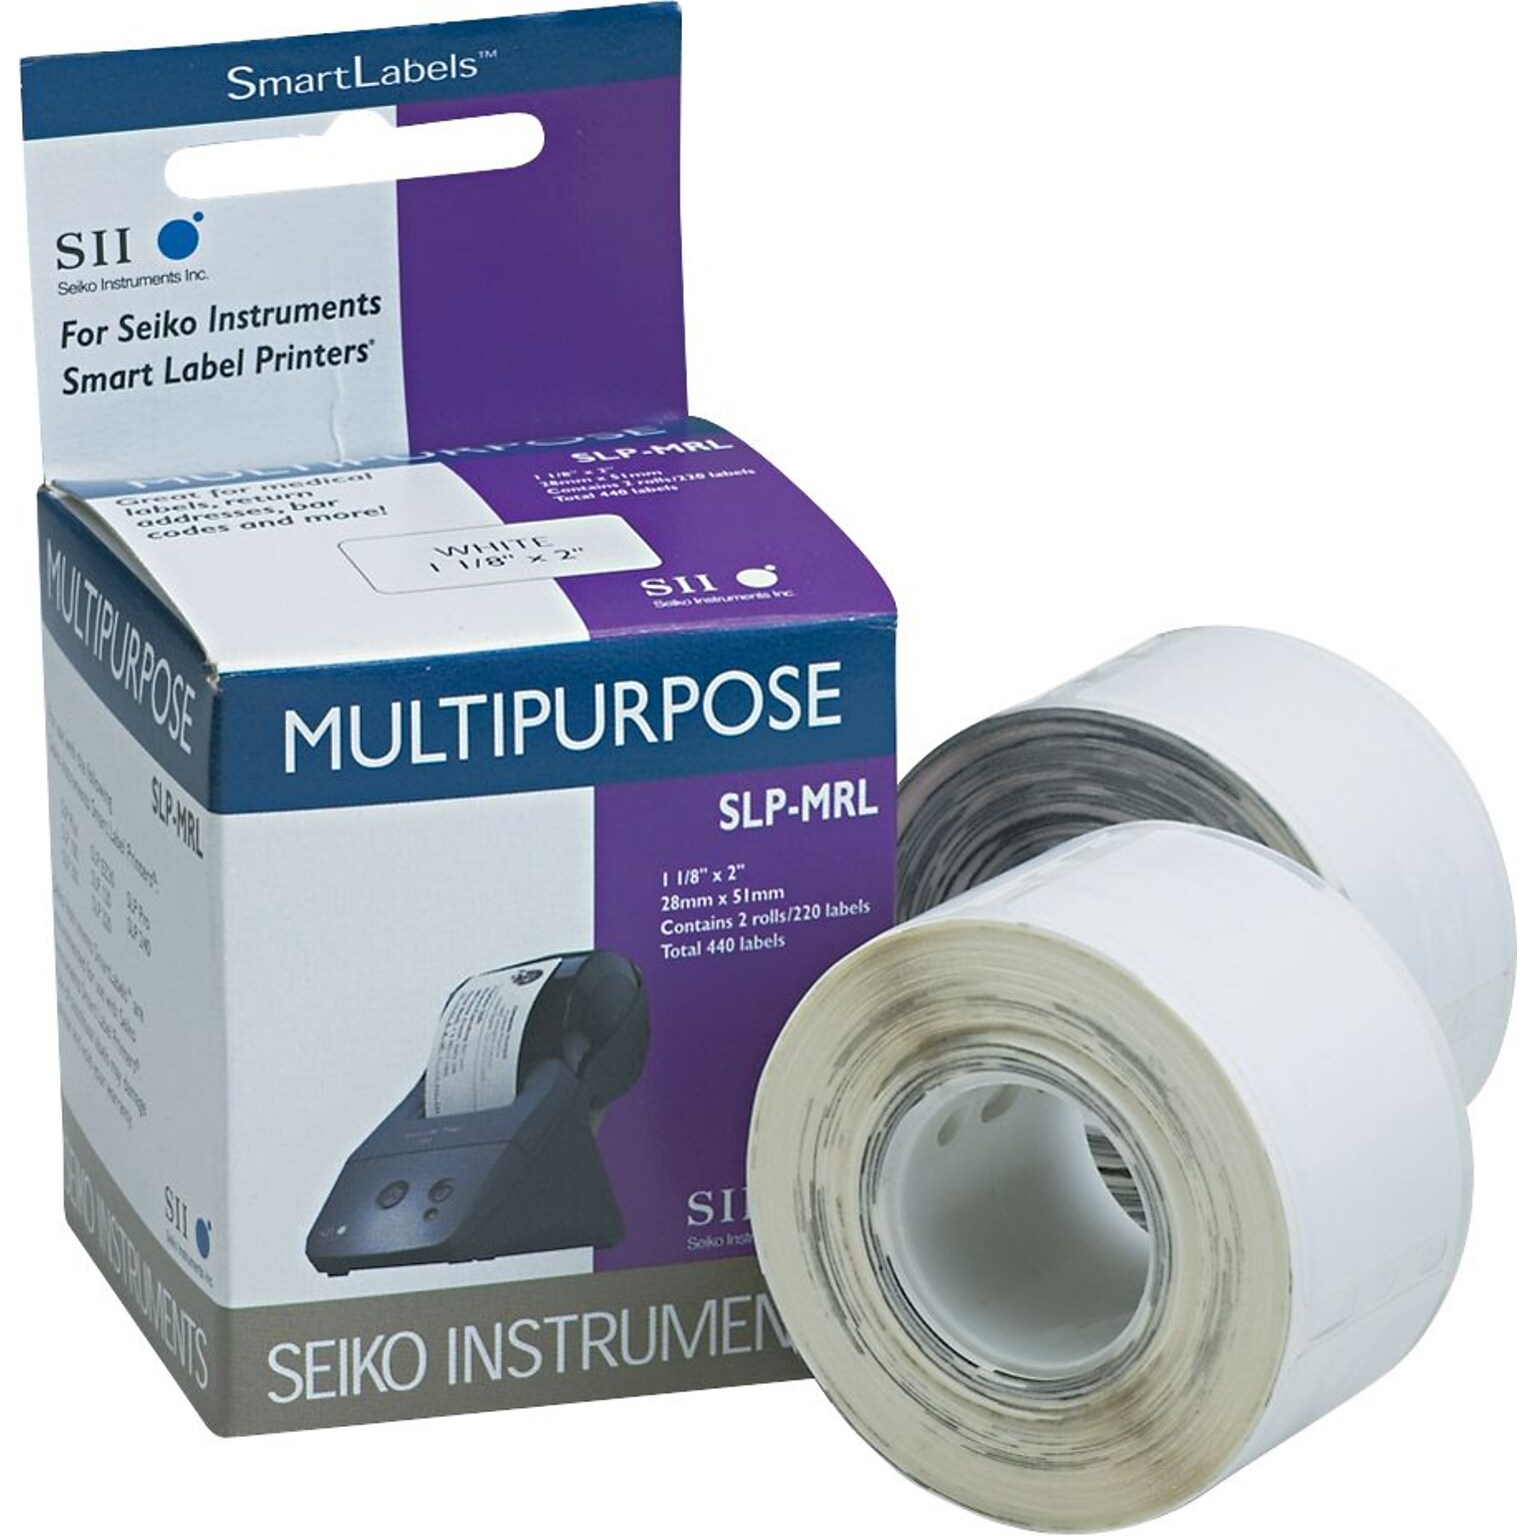 Seiko Self-Adhesive Multiuse Labels for Smart Label Printers, White, 1 1/8 x 2, 440 Labels Per Pack (SLP-MRL)